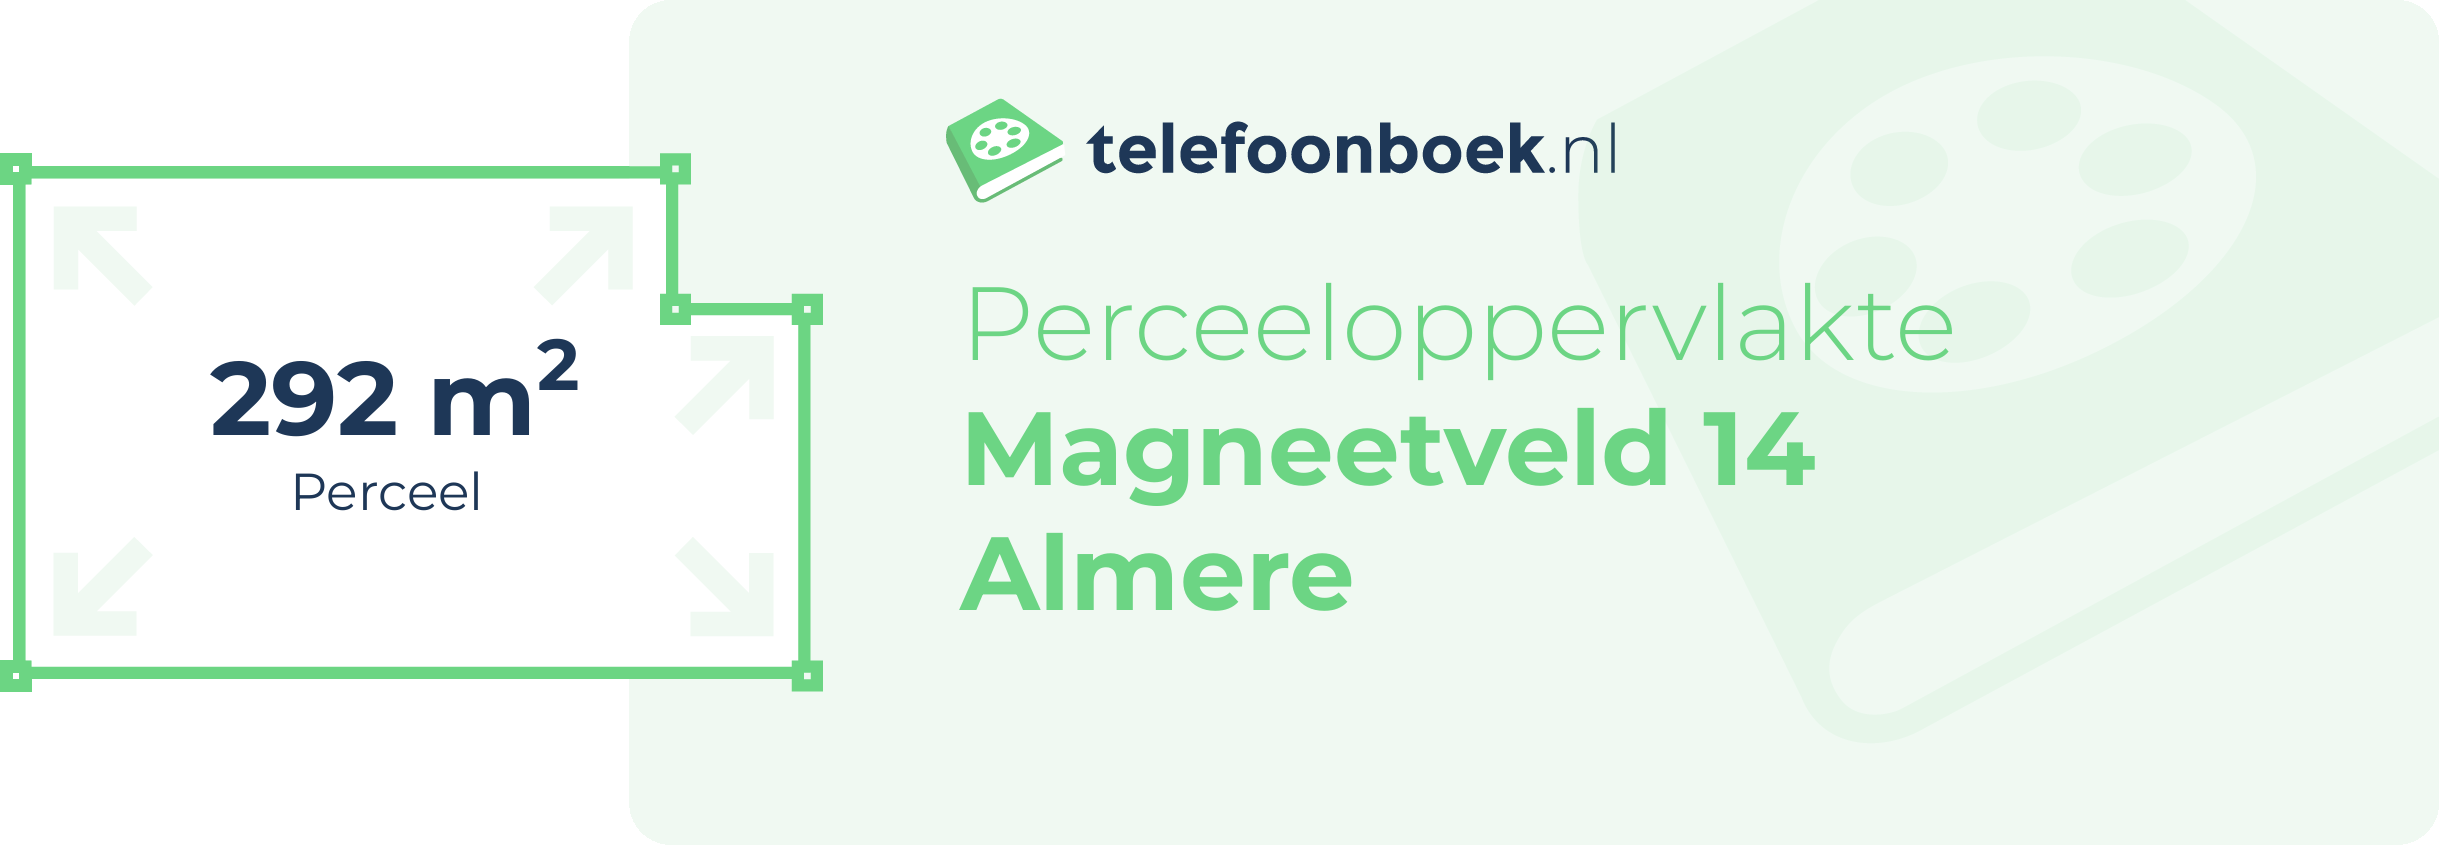 Perceeloppervlakte Magneetveld 14 Almere